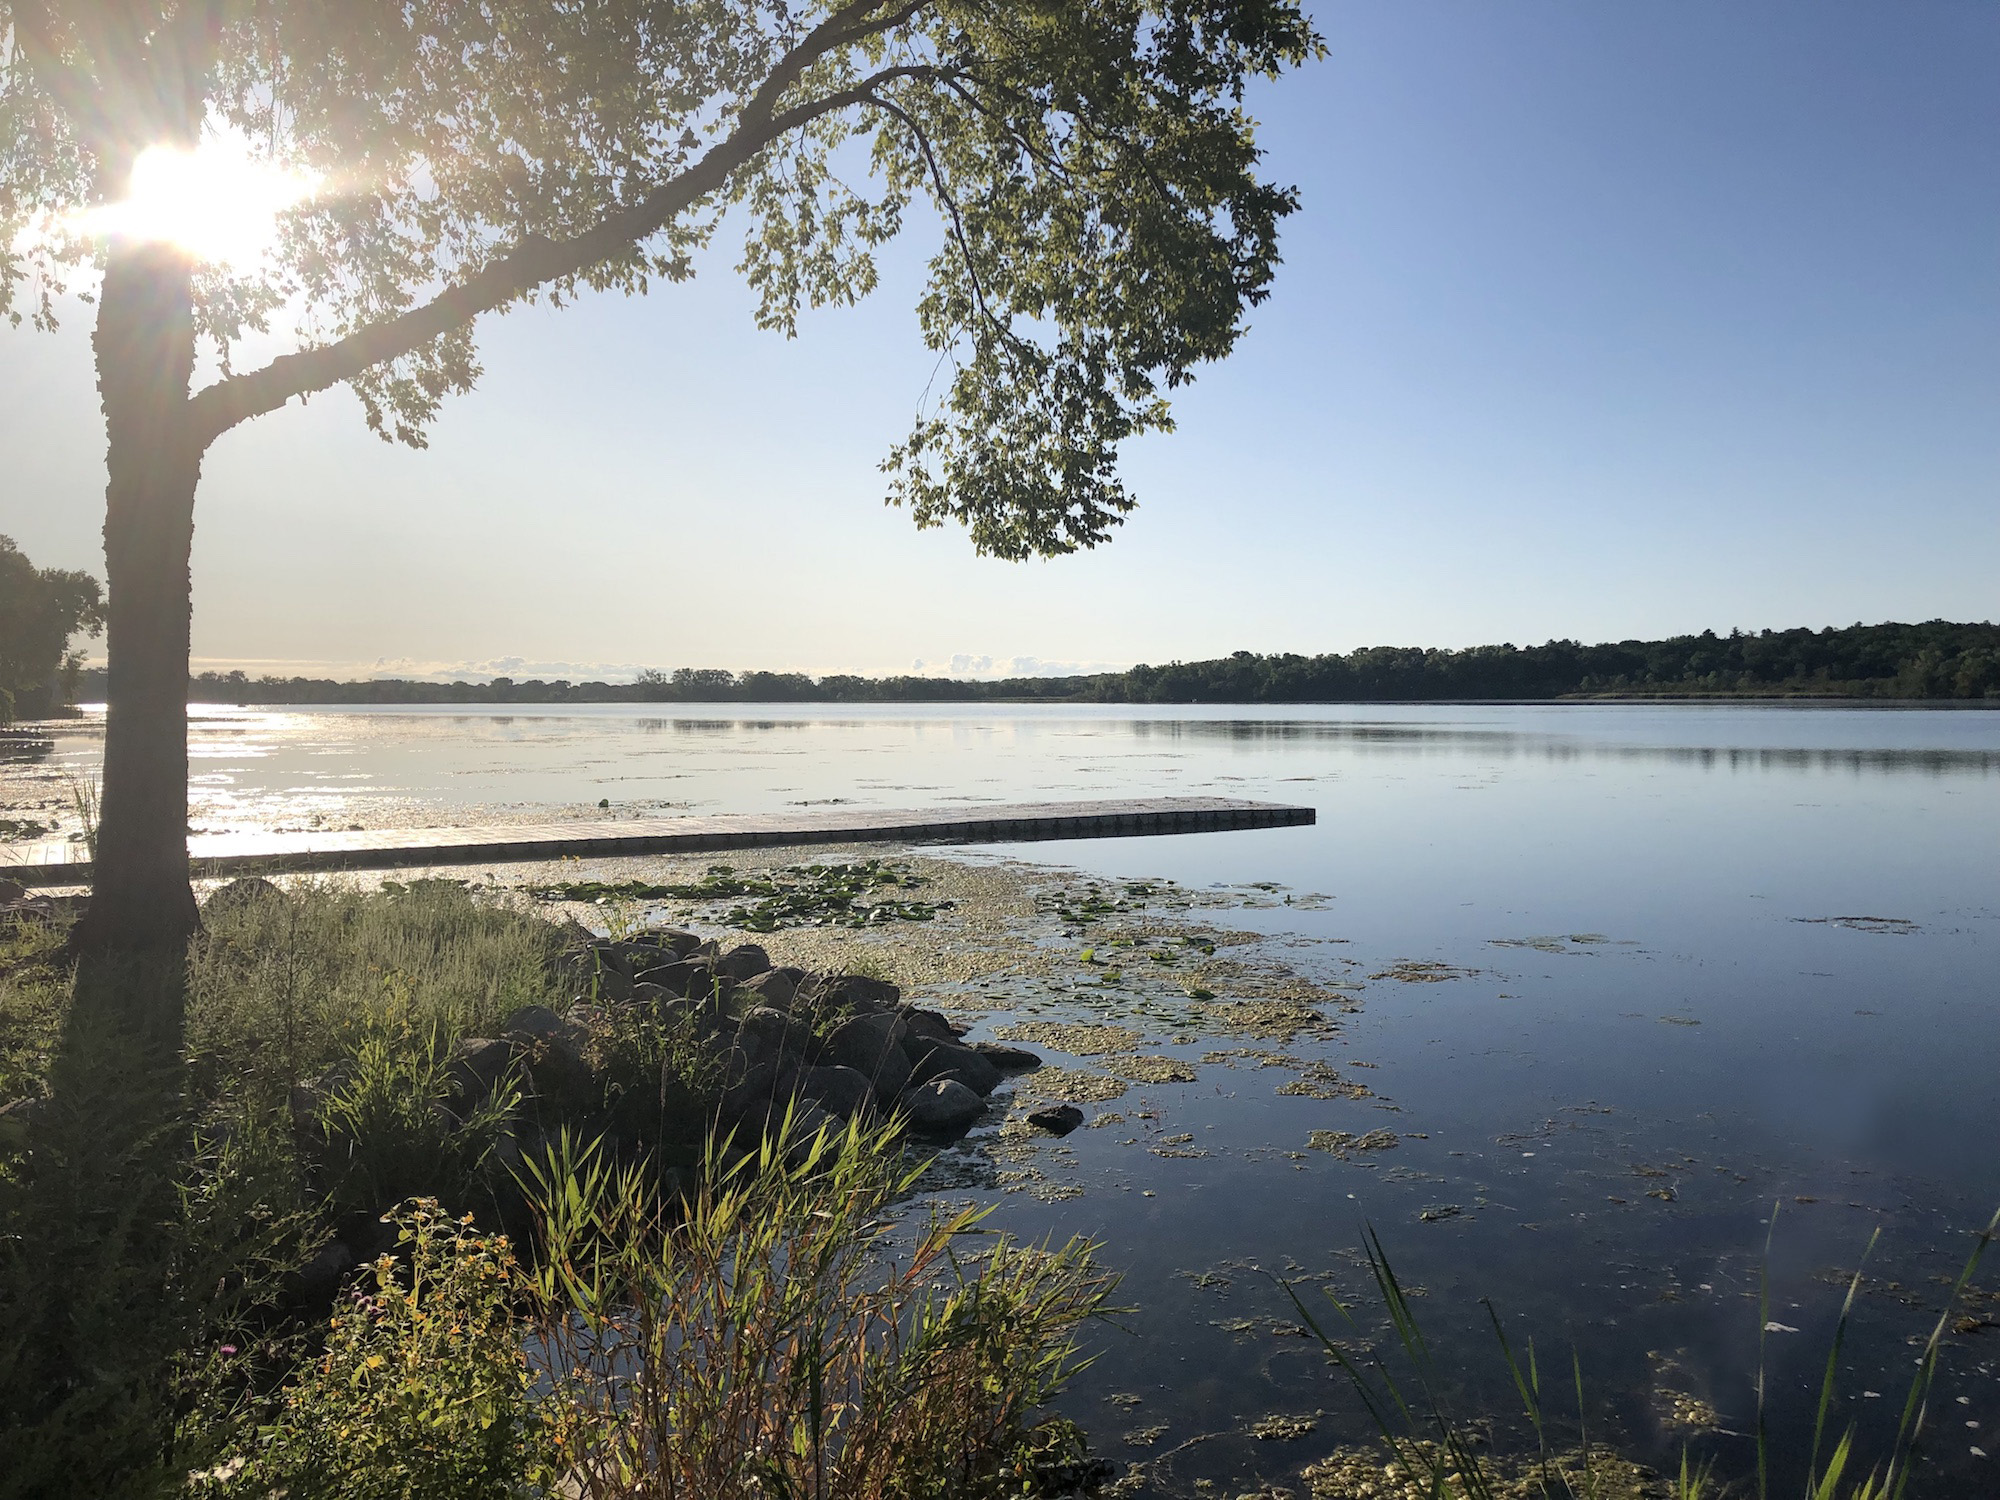 Lake Wingra on August 24, 2019.